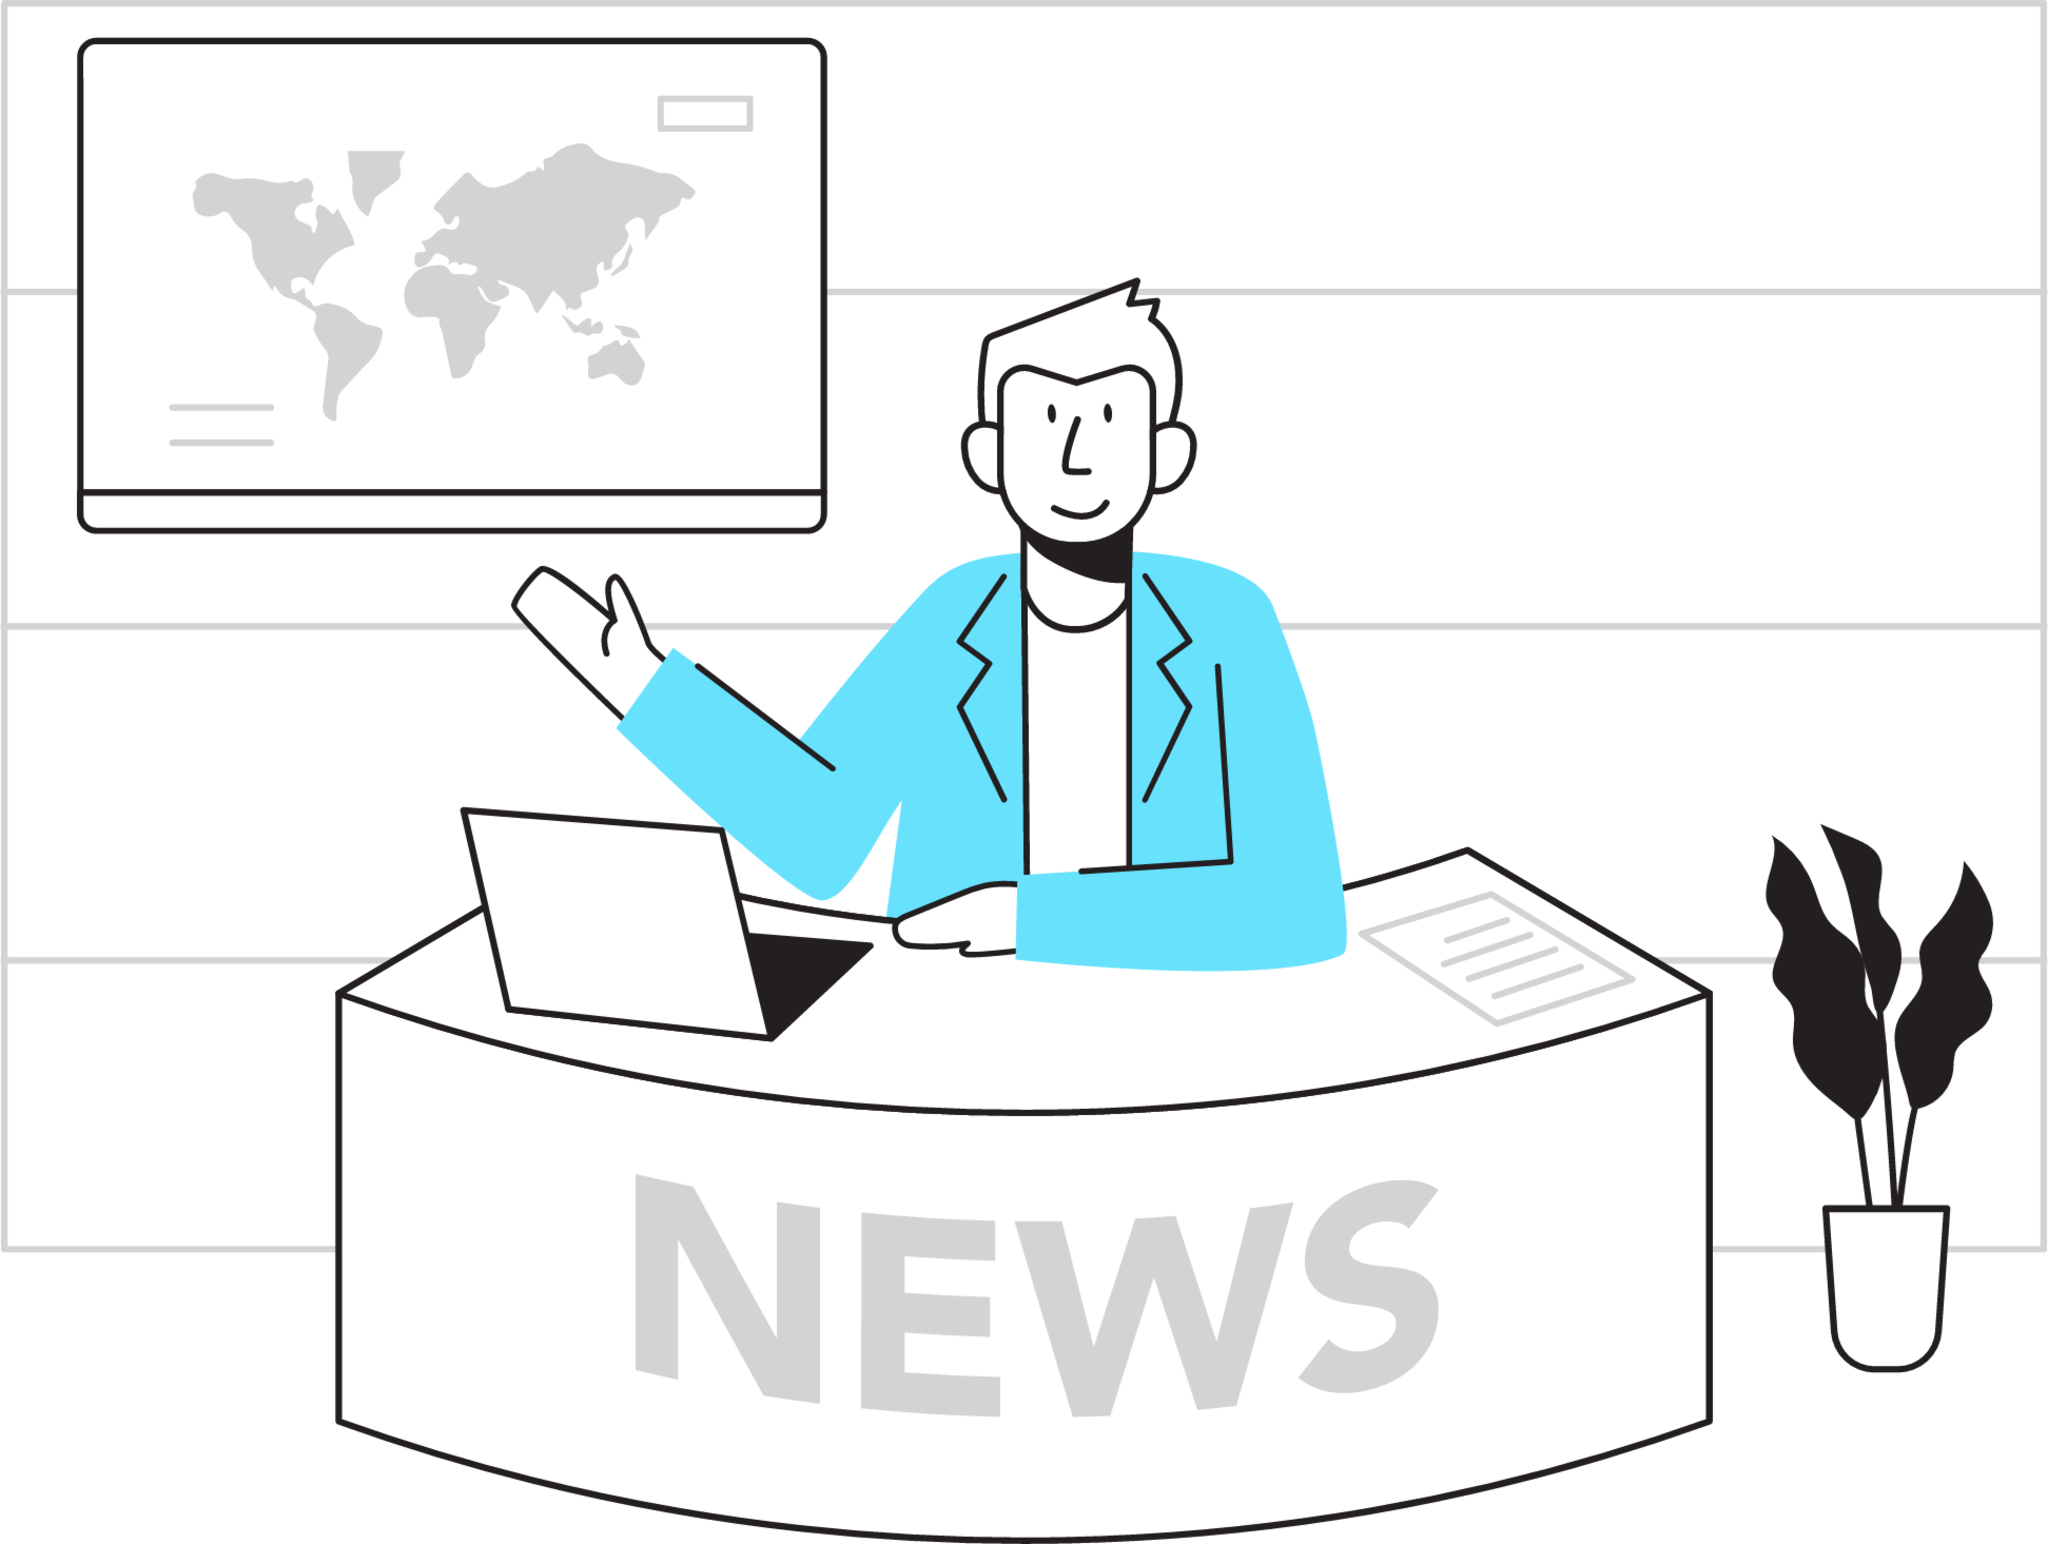 News presenter illustration